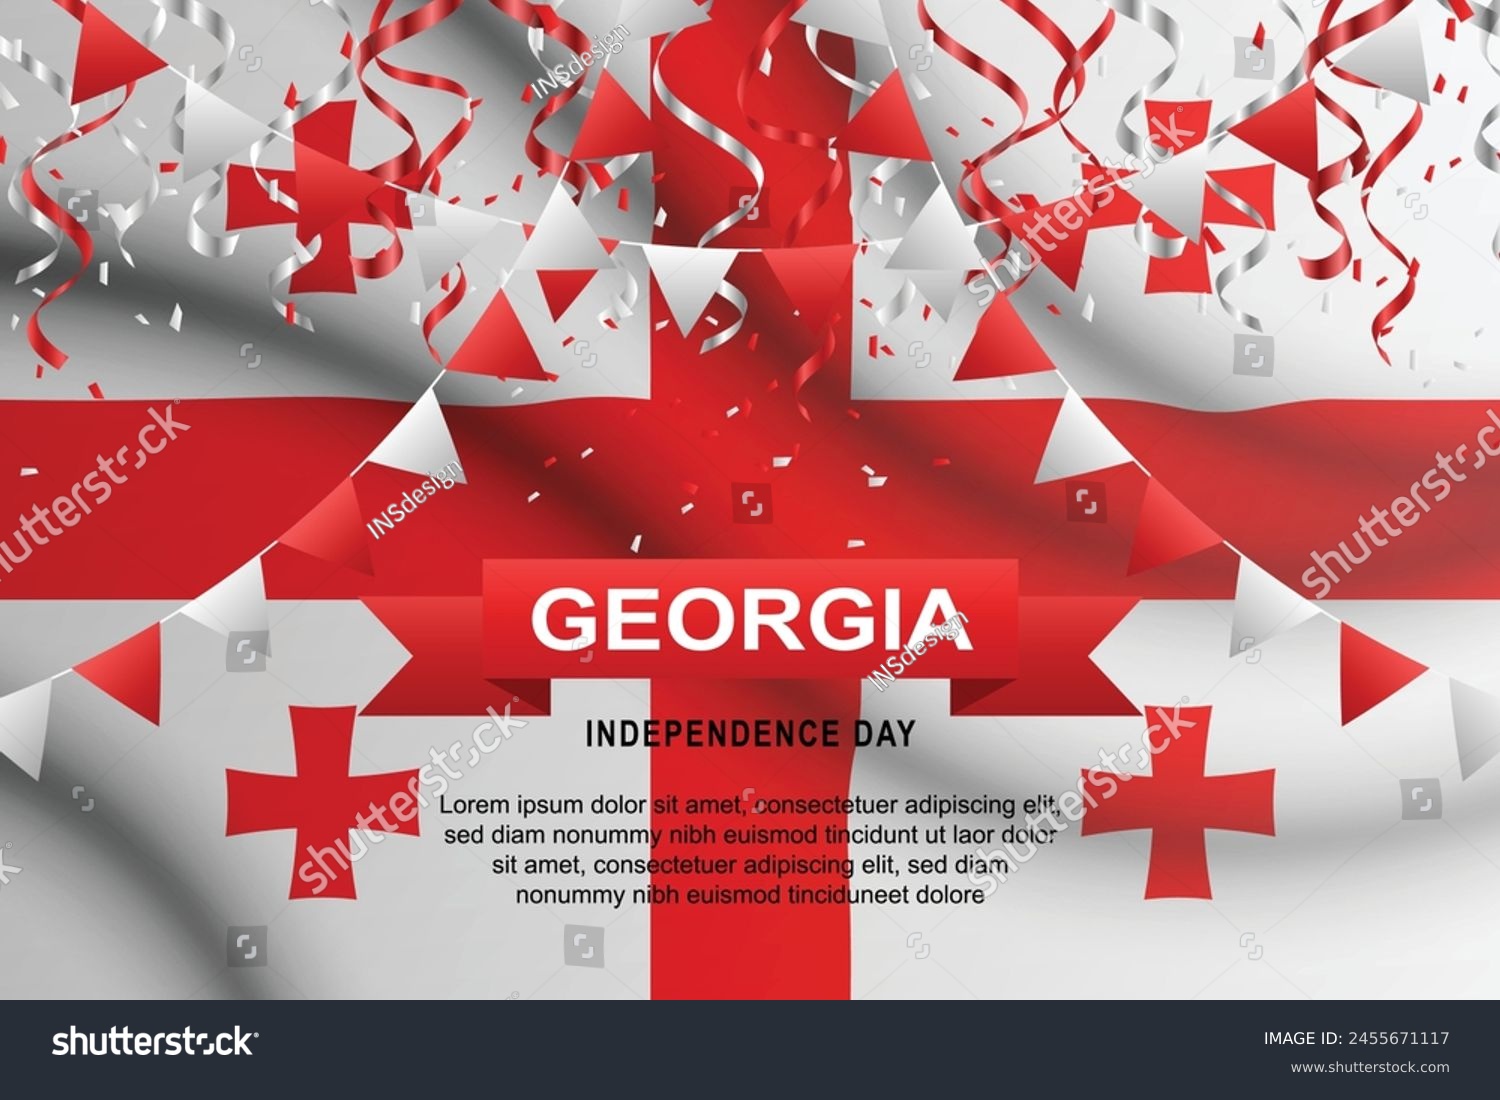 SVG of Georgia Independence Day background. Vector illustration. svg